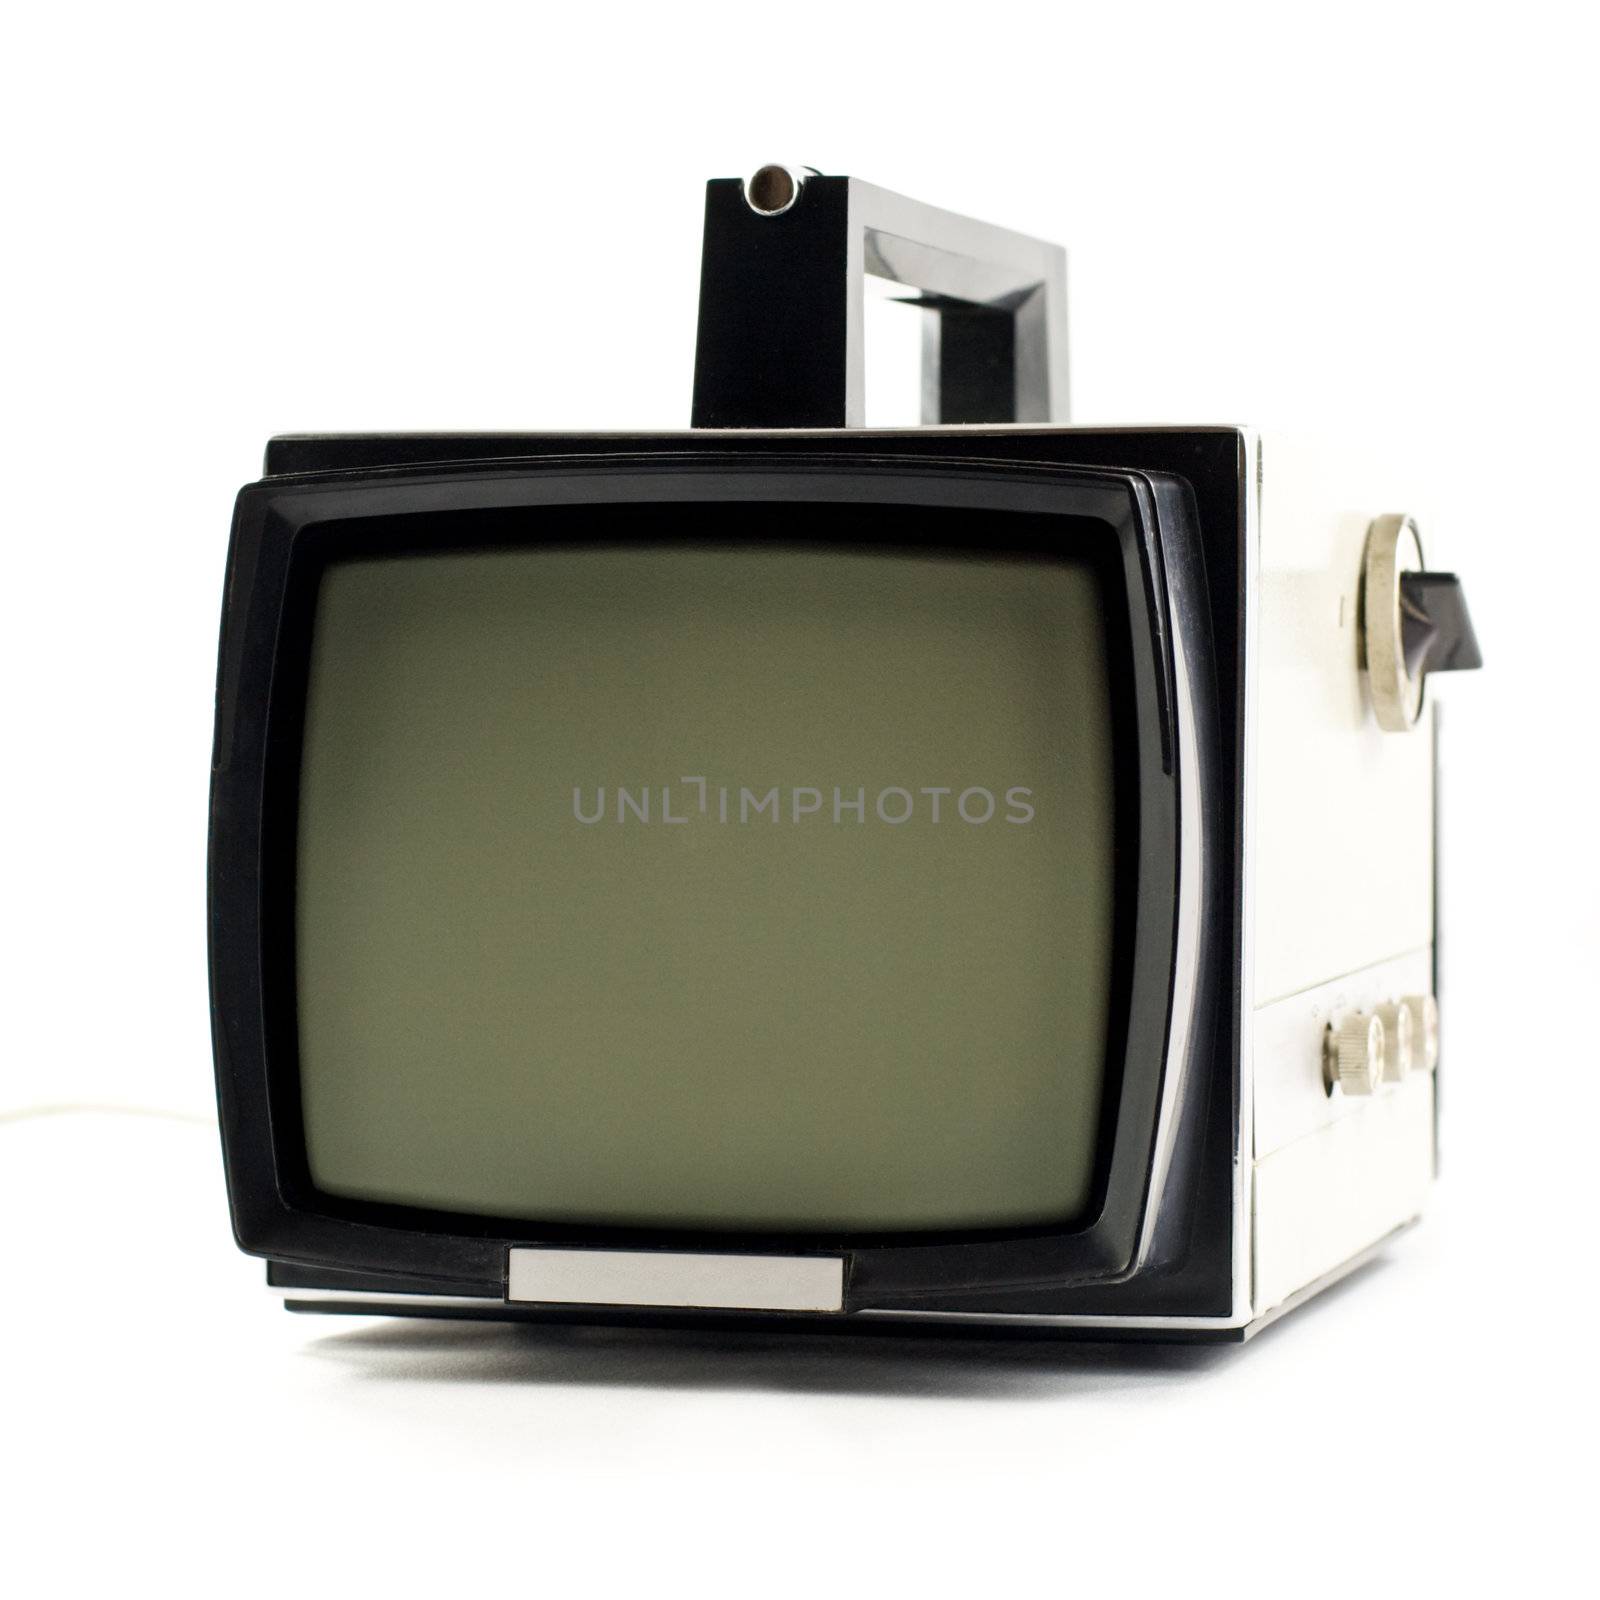 Vintage portable Television set isolated on white background